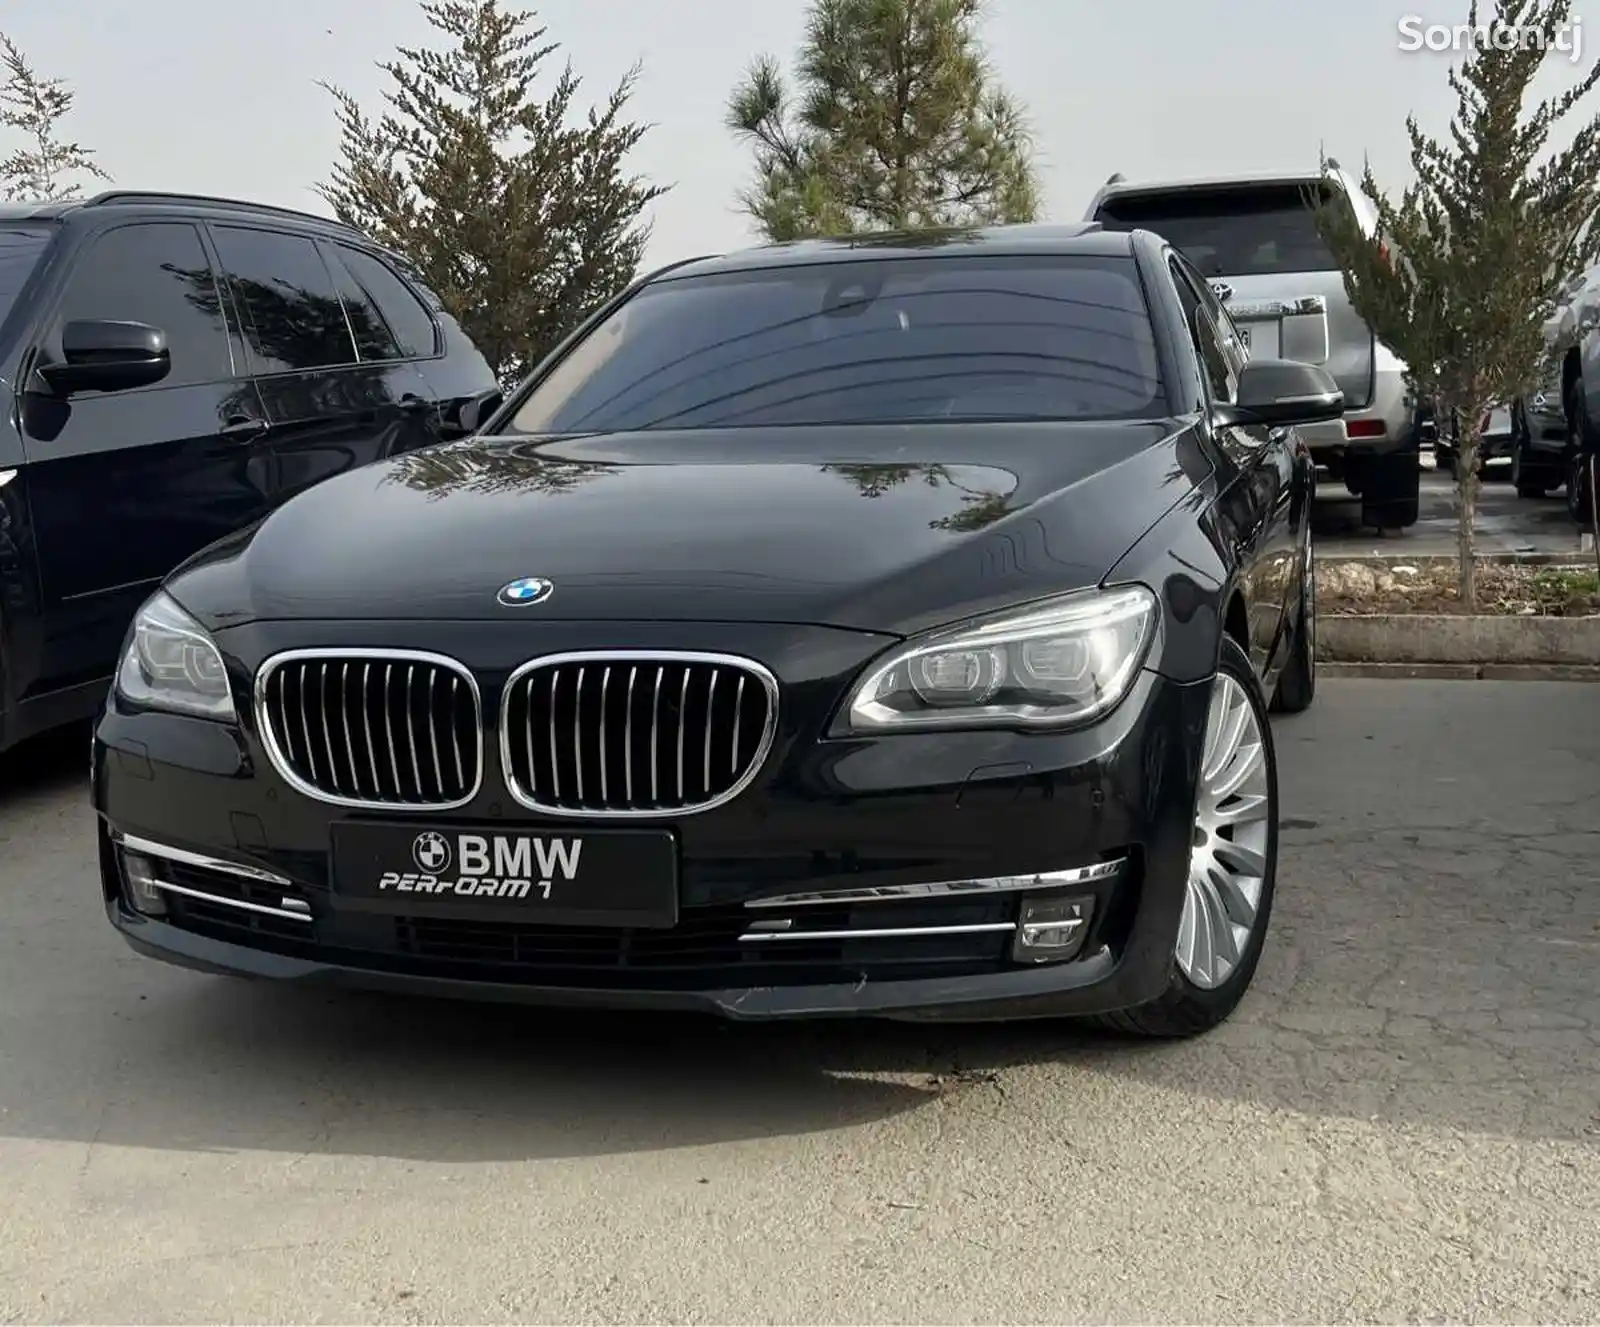 BMW 7 series, 2014-15